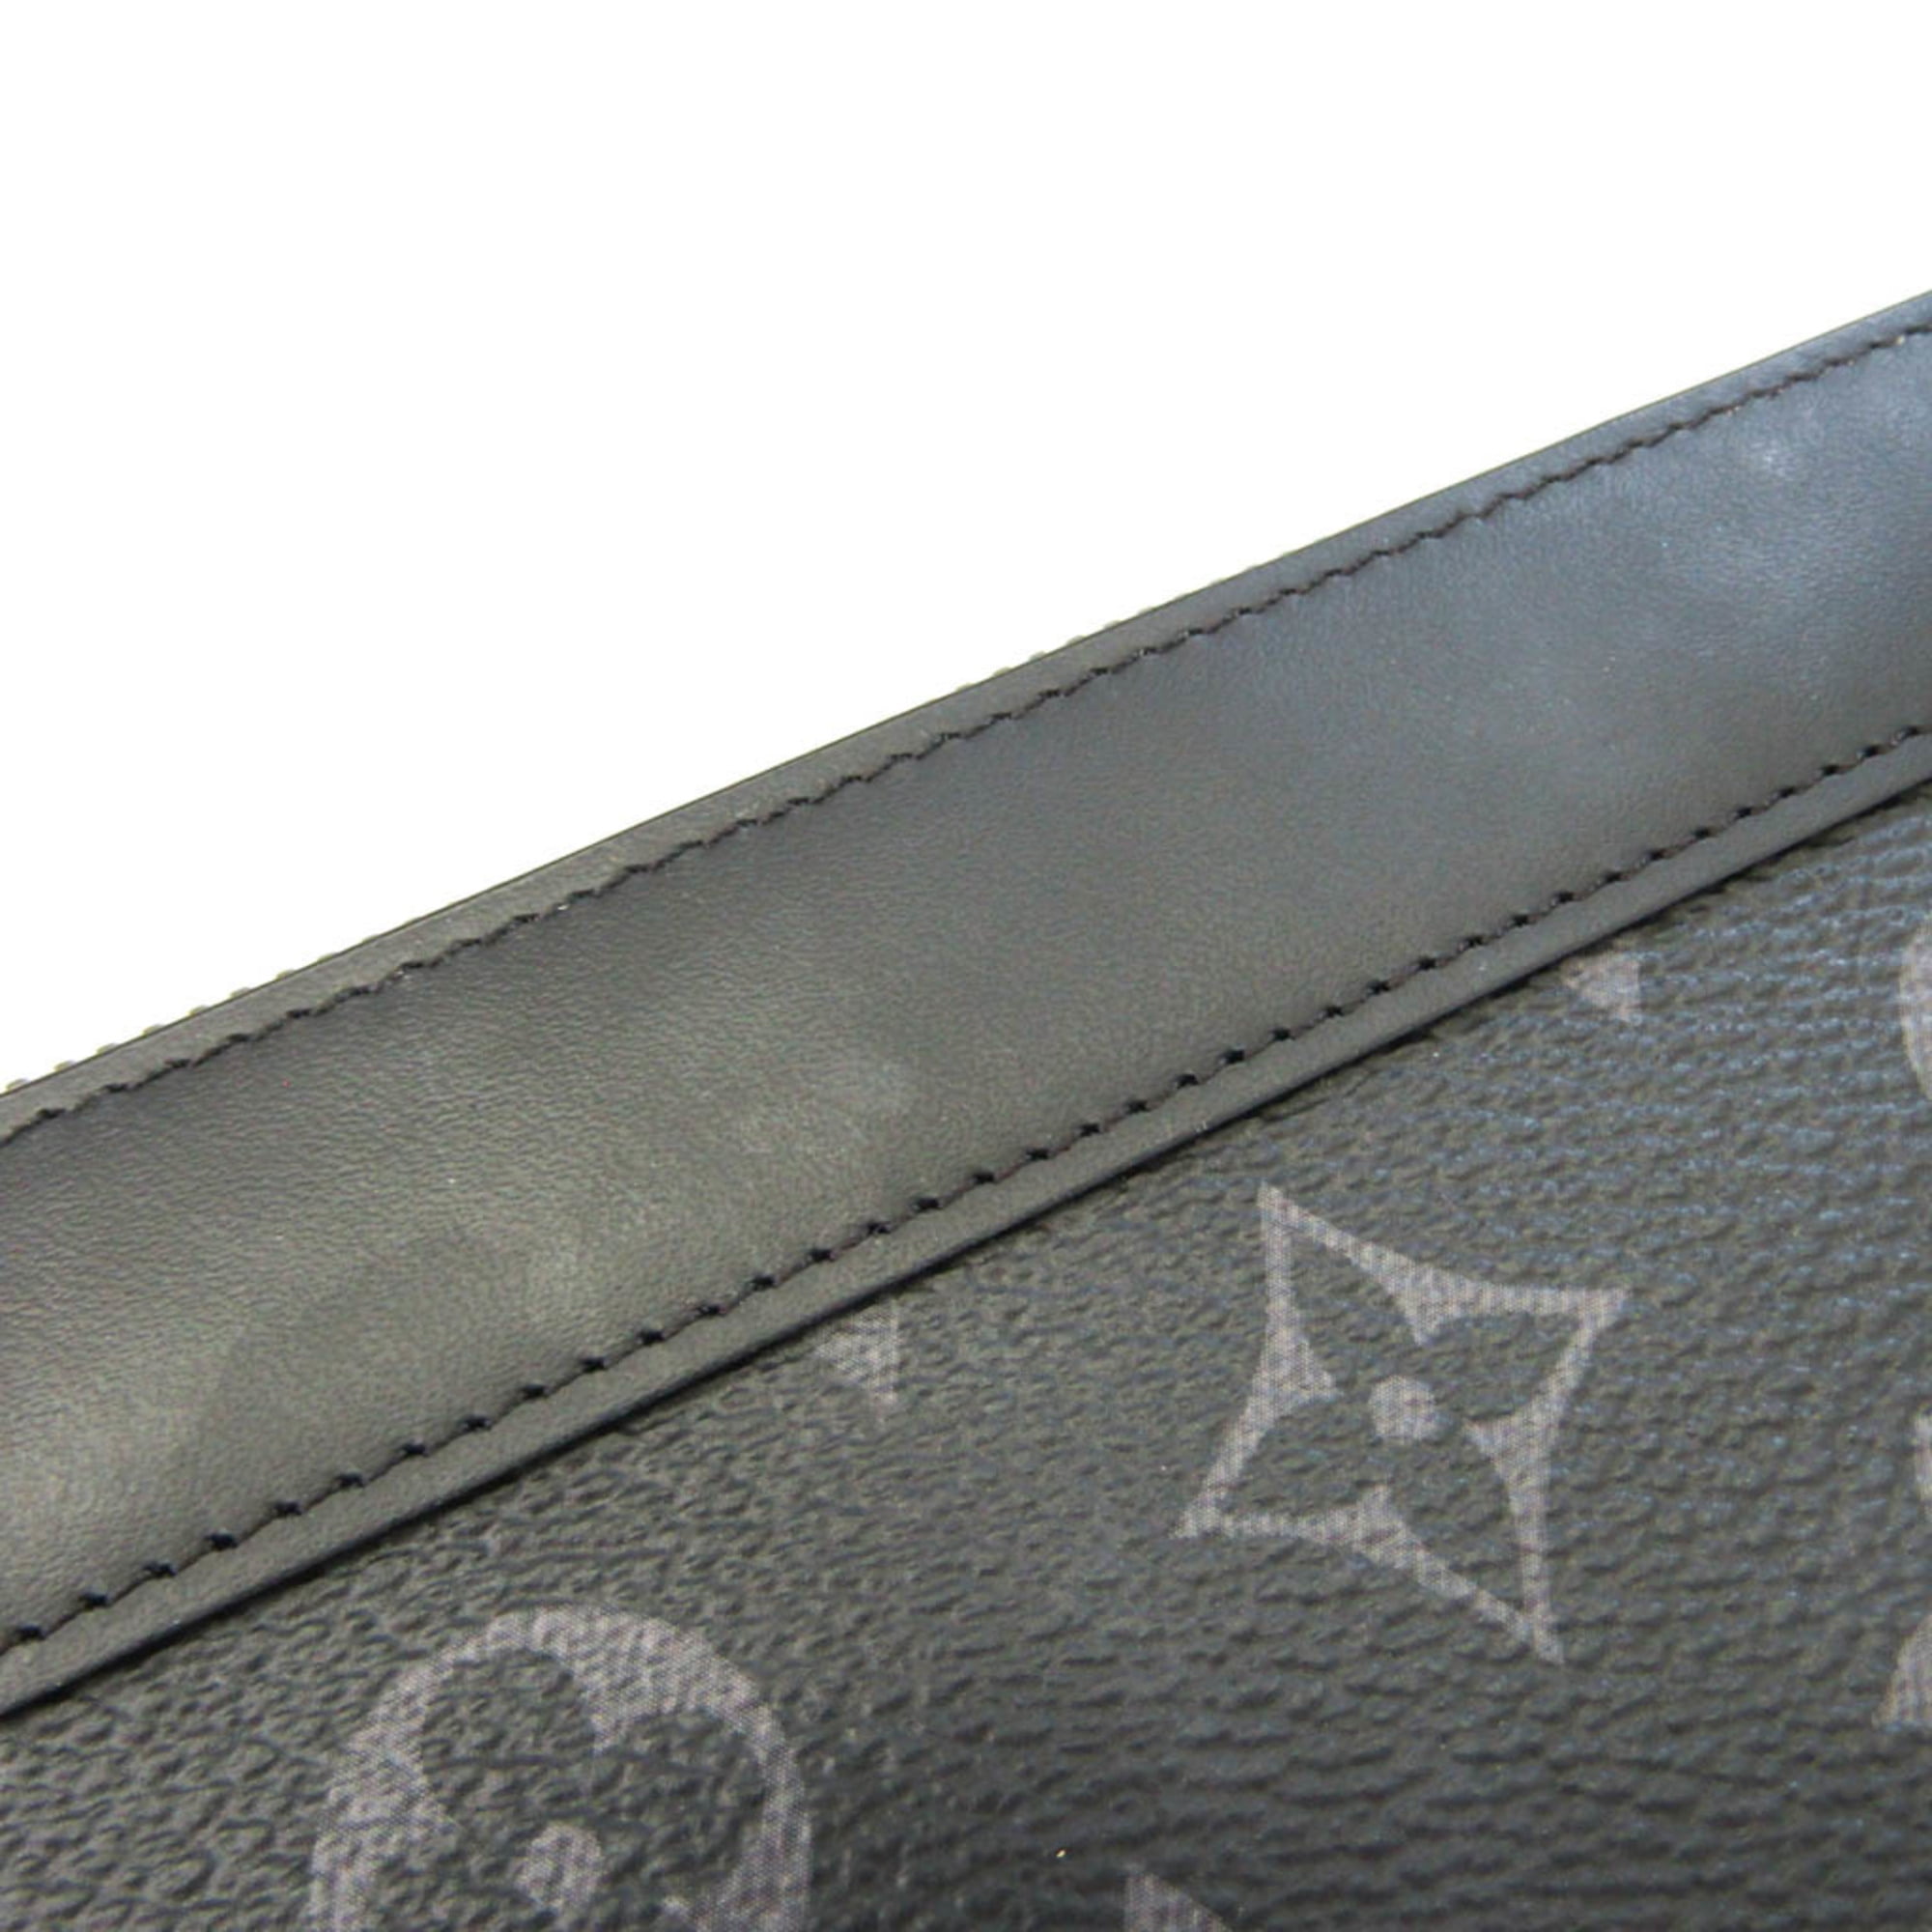 Authenticated Used Louis Vuitton Monogram Eclipse Pochette Discovery PM  M44323 Men's Clutch Bag,Pouch Monogram Eclipse 